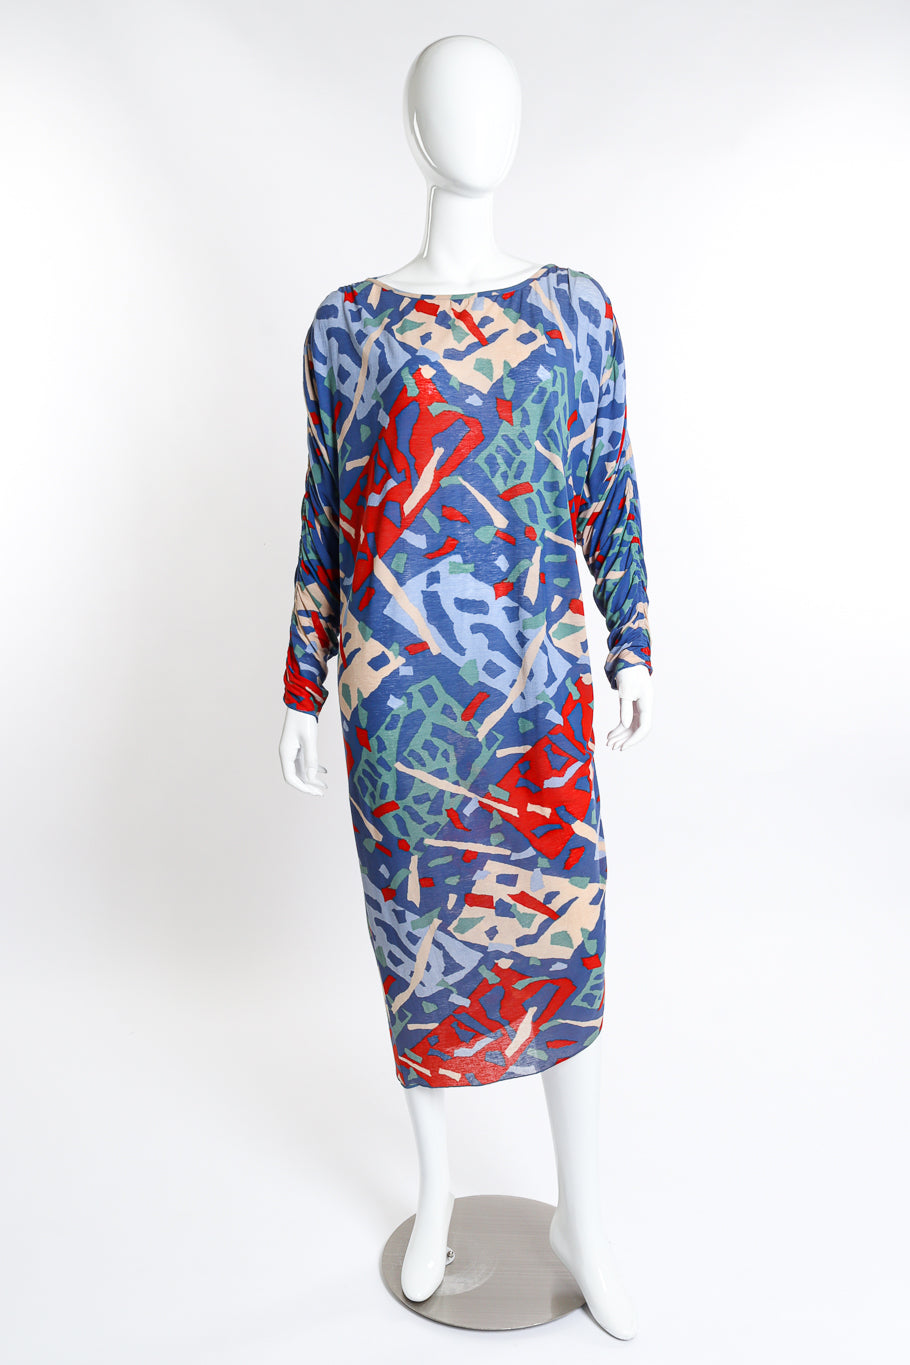 Vintage Missoni Abstract Print Dress front on mannequin @recess la